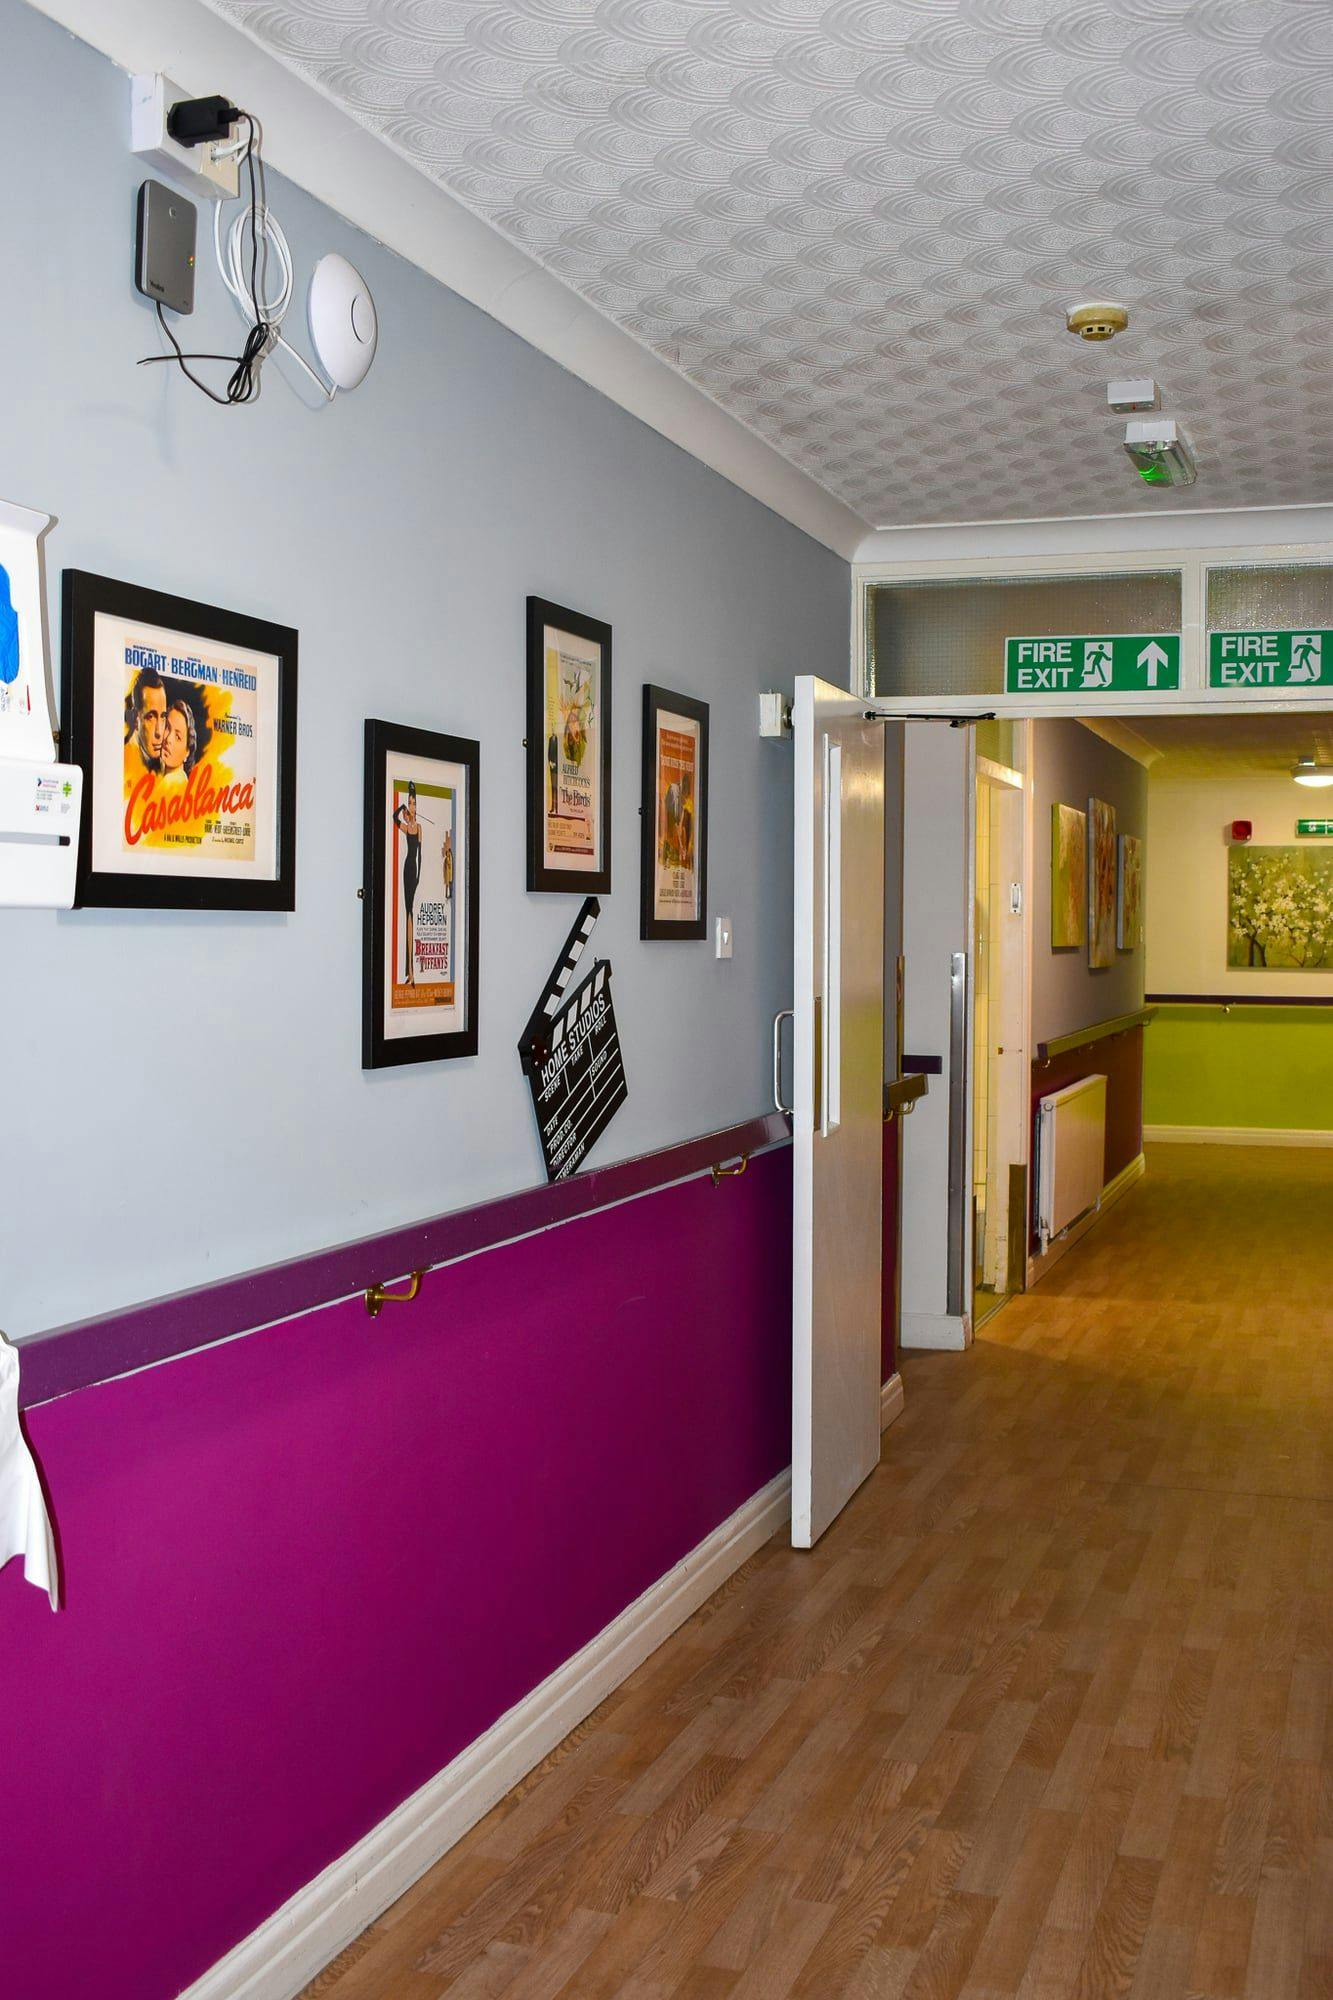 Hallway at Mahogany Care Home, Newtown, Wigan, Lancashire